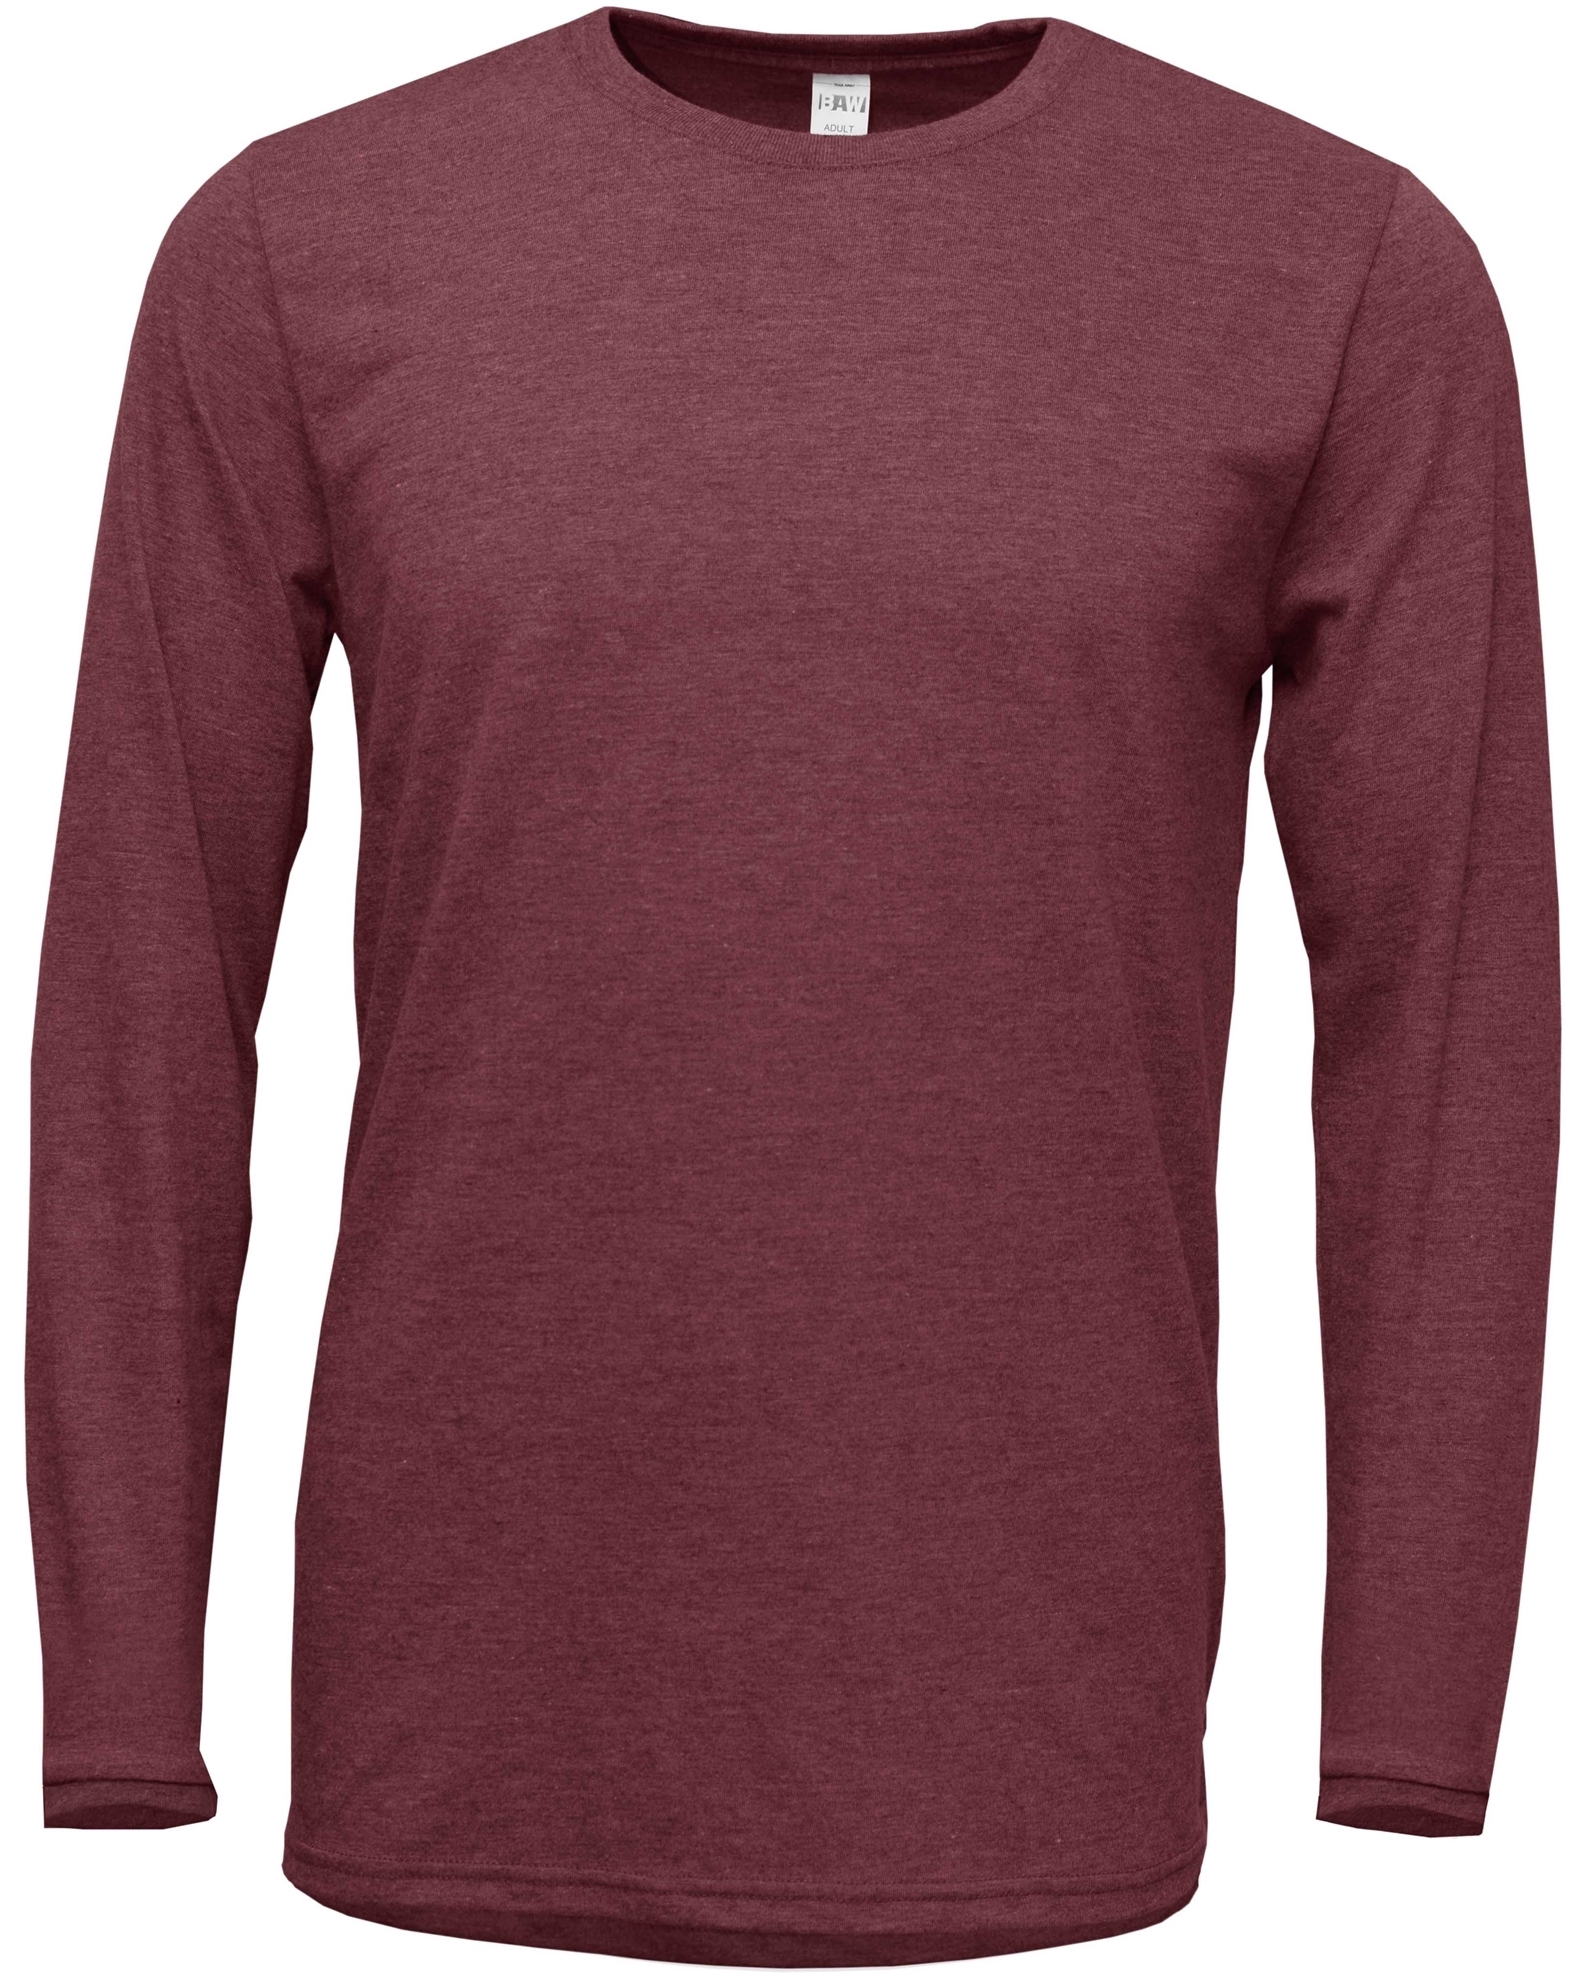 BAW Athletic Wear PC196Y - Youth Soft-Tek Blend Long Sleeve Shirt